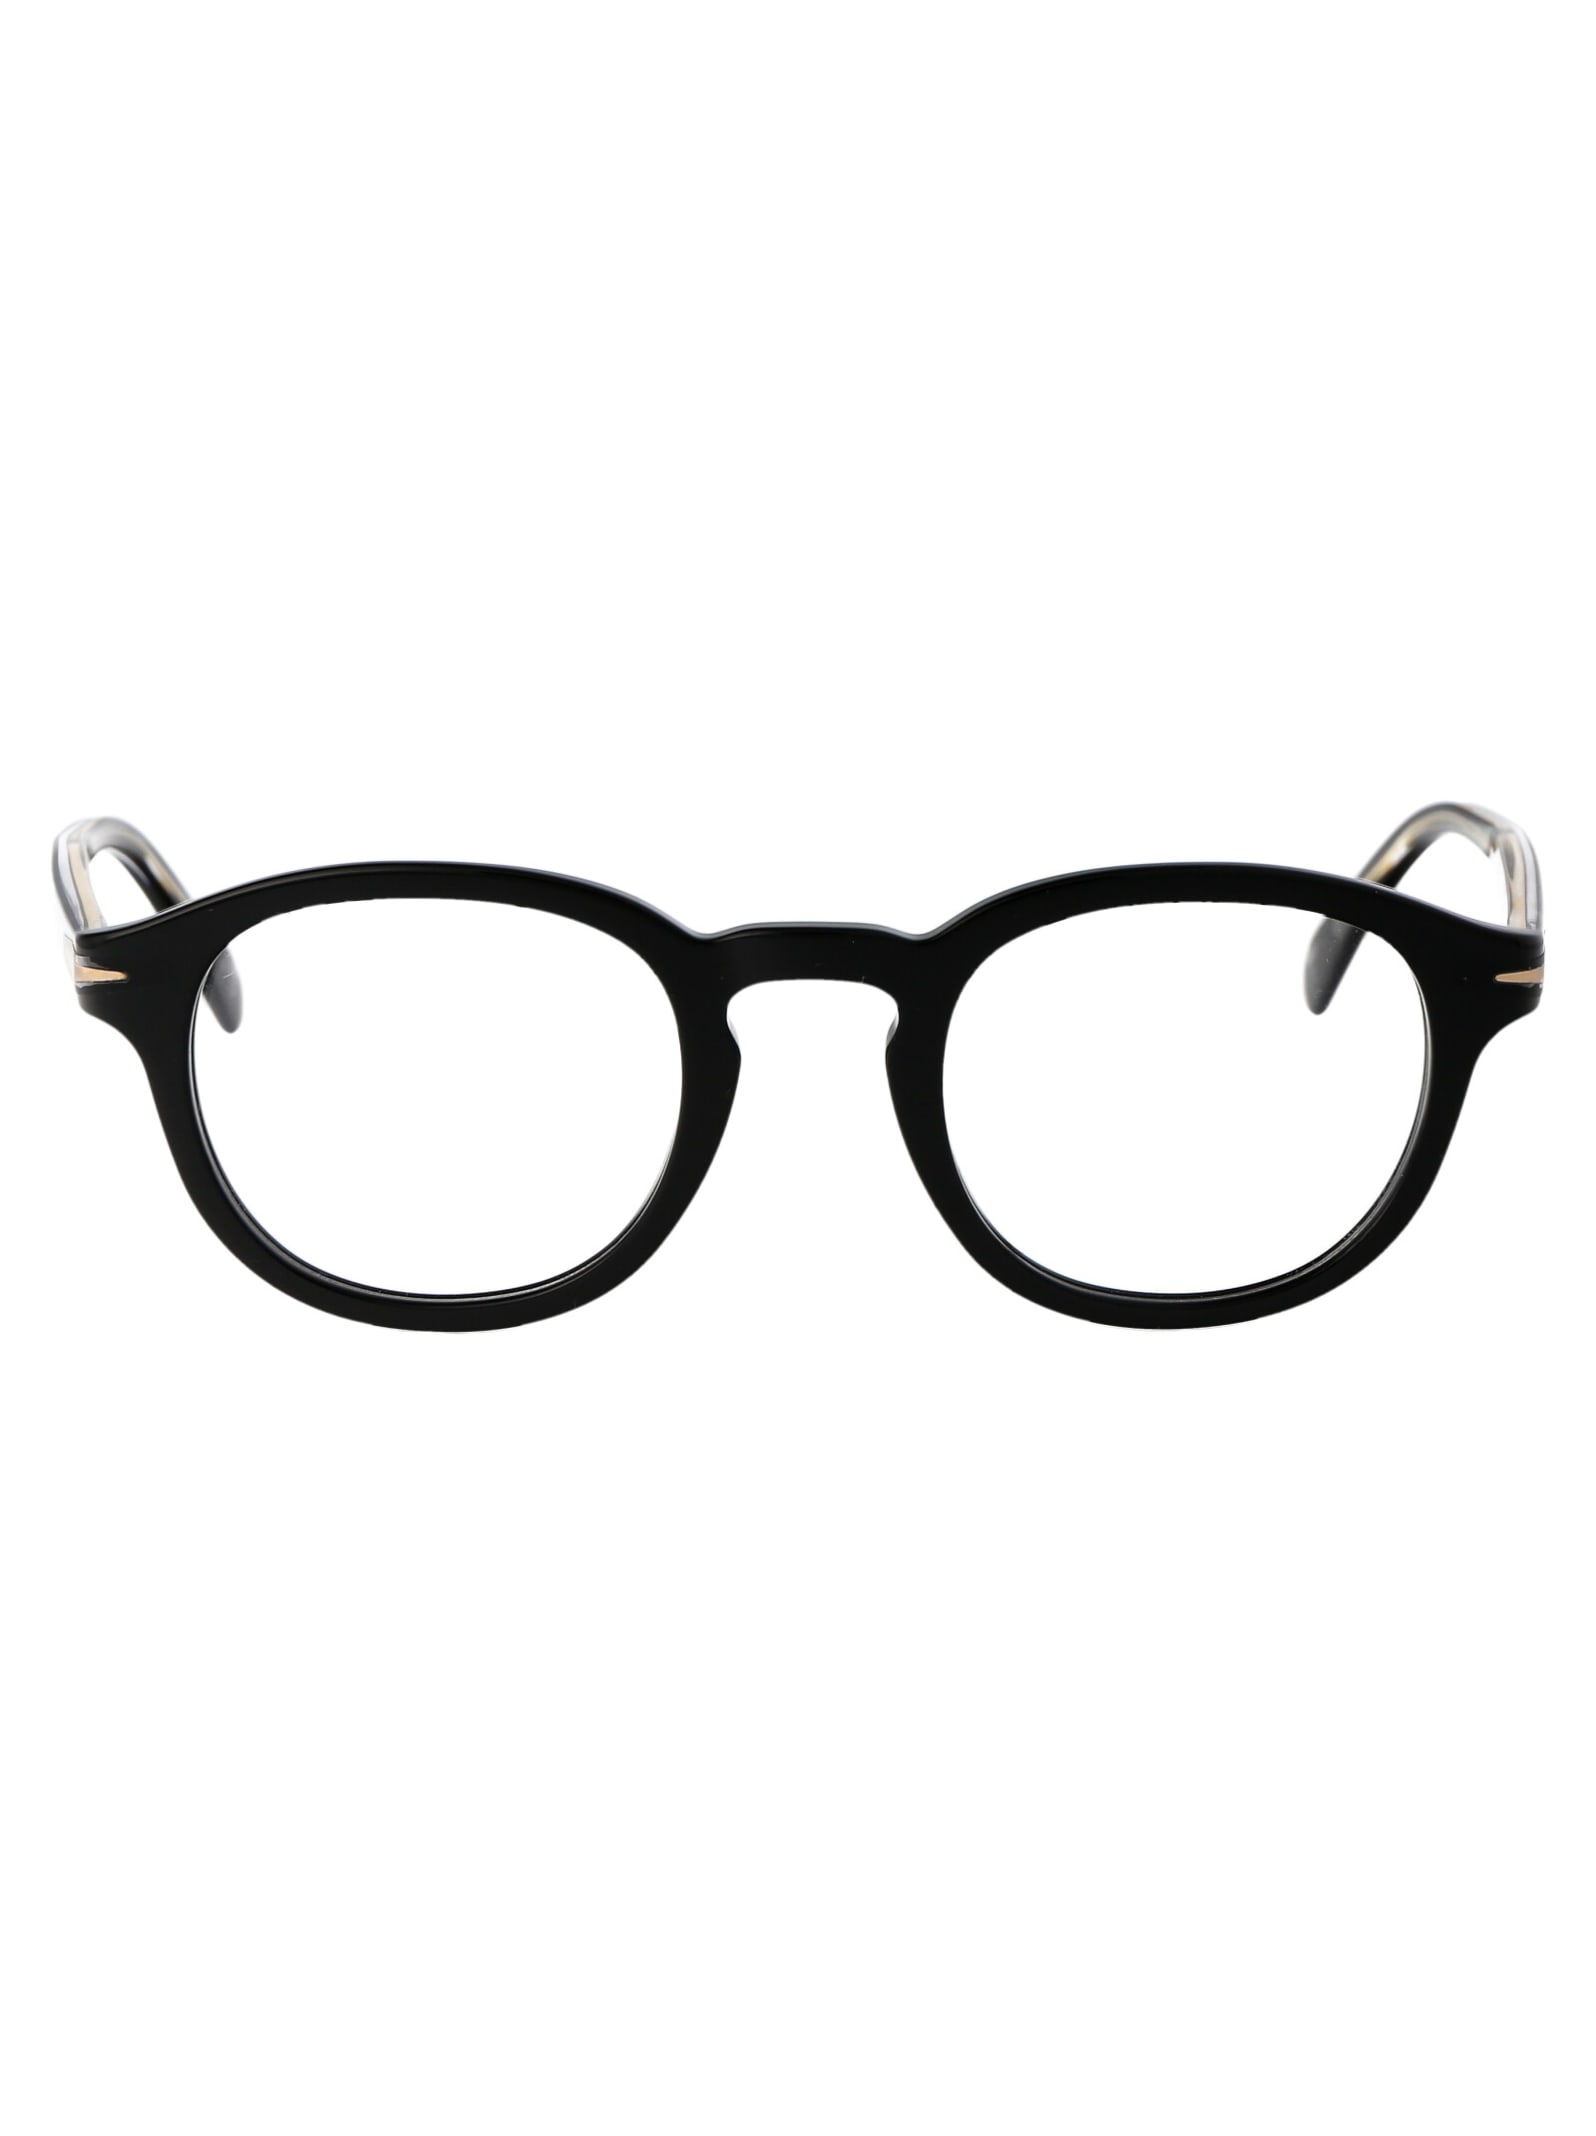 db eyewear by david beckham db 7017 glasses